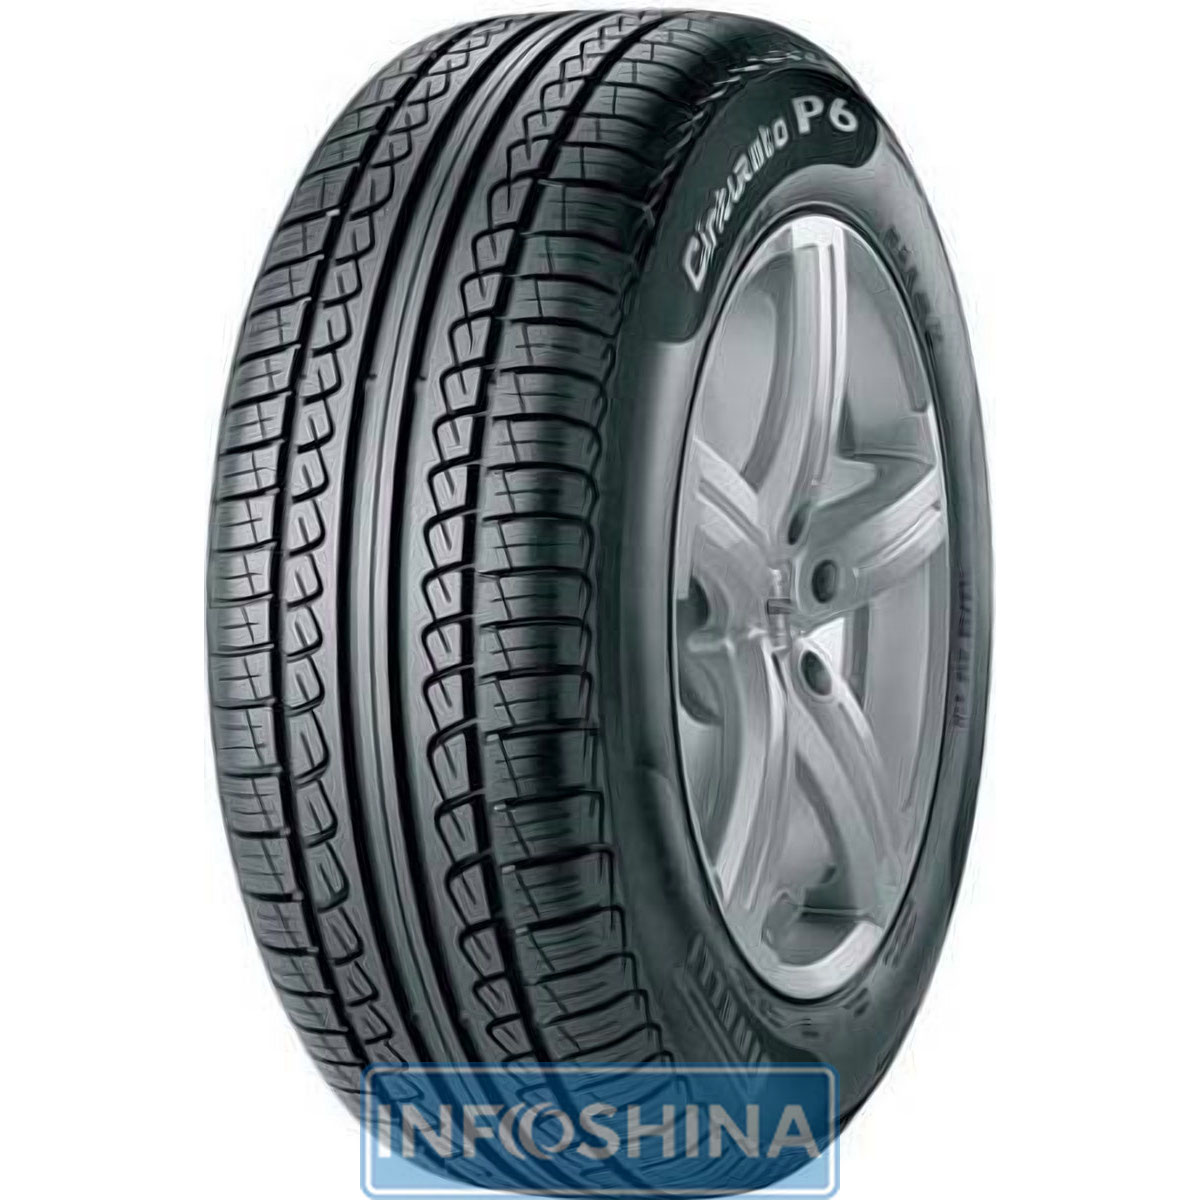 Купить шины Pirelli Cinturato P6 205/60 R15 91H